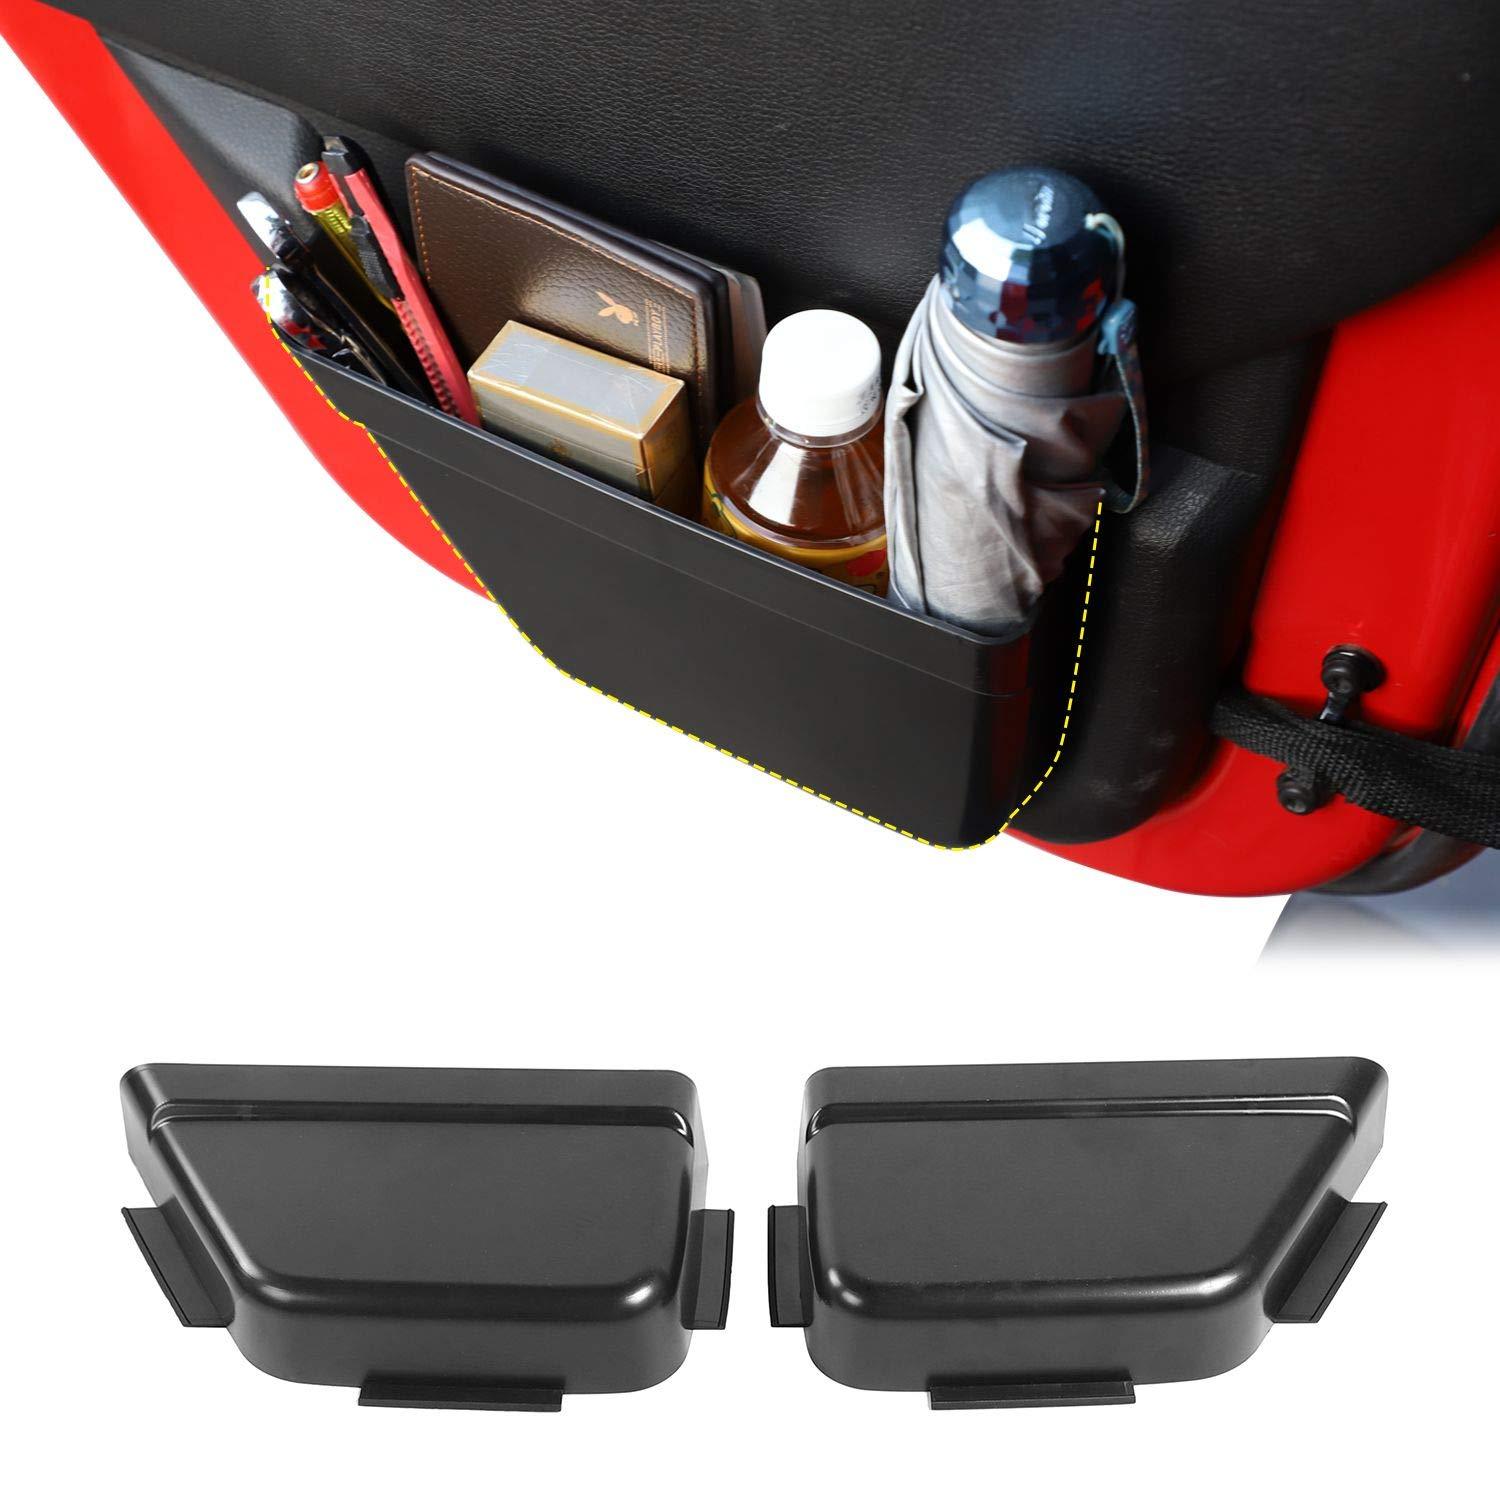 Lebogner Glove Box Compartment Car Accessories Organizer, Multipurpose - 2